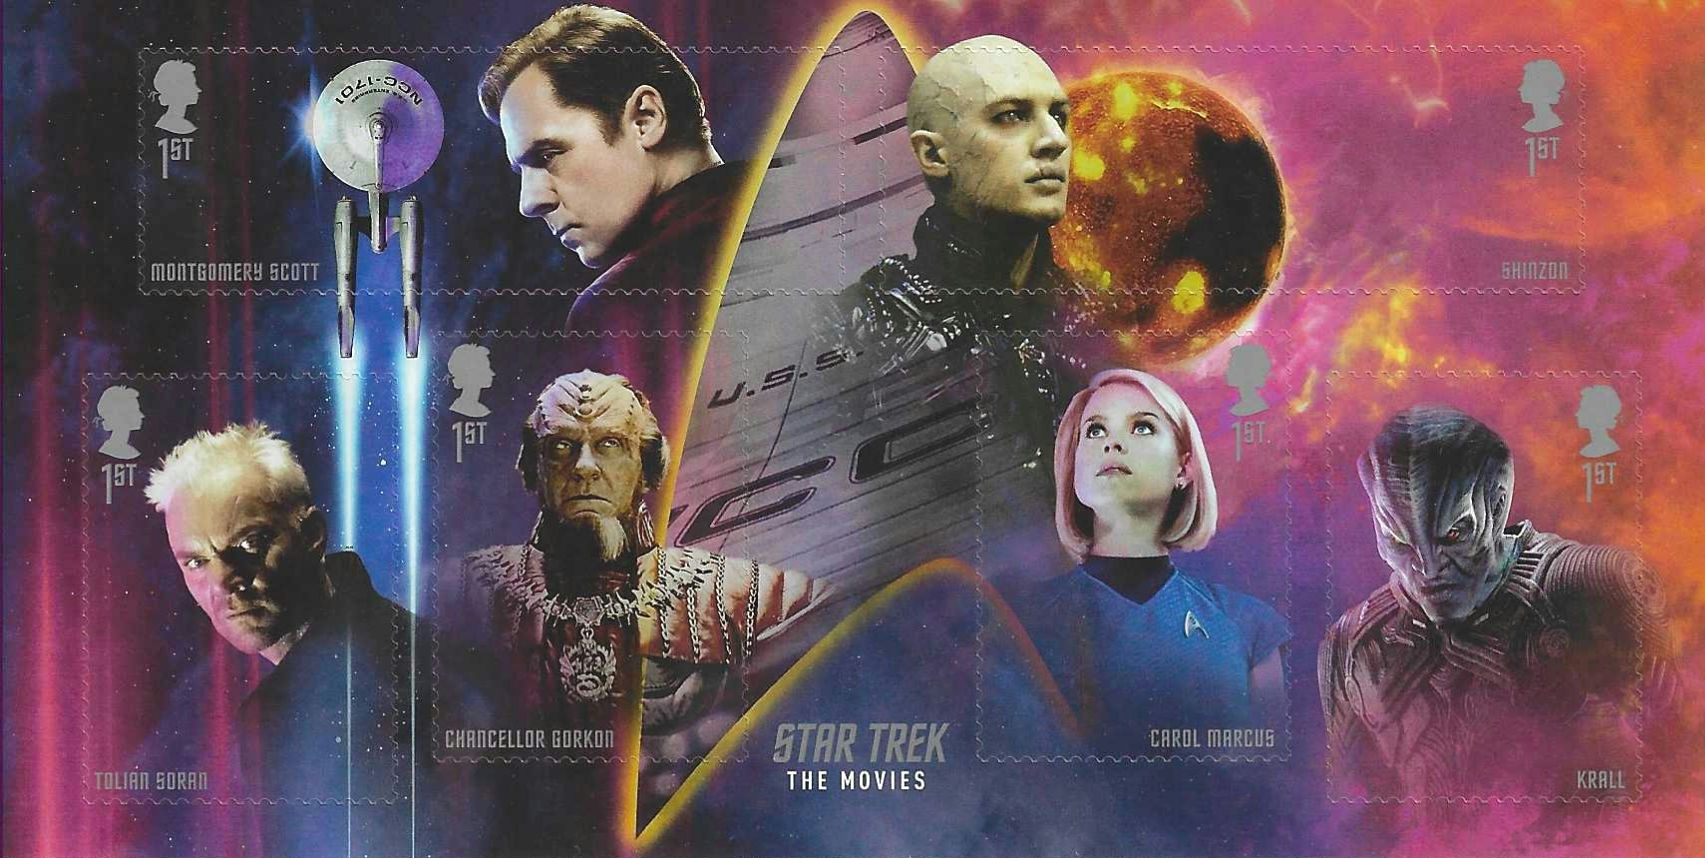 Star Trek stamps from United Kingdom